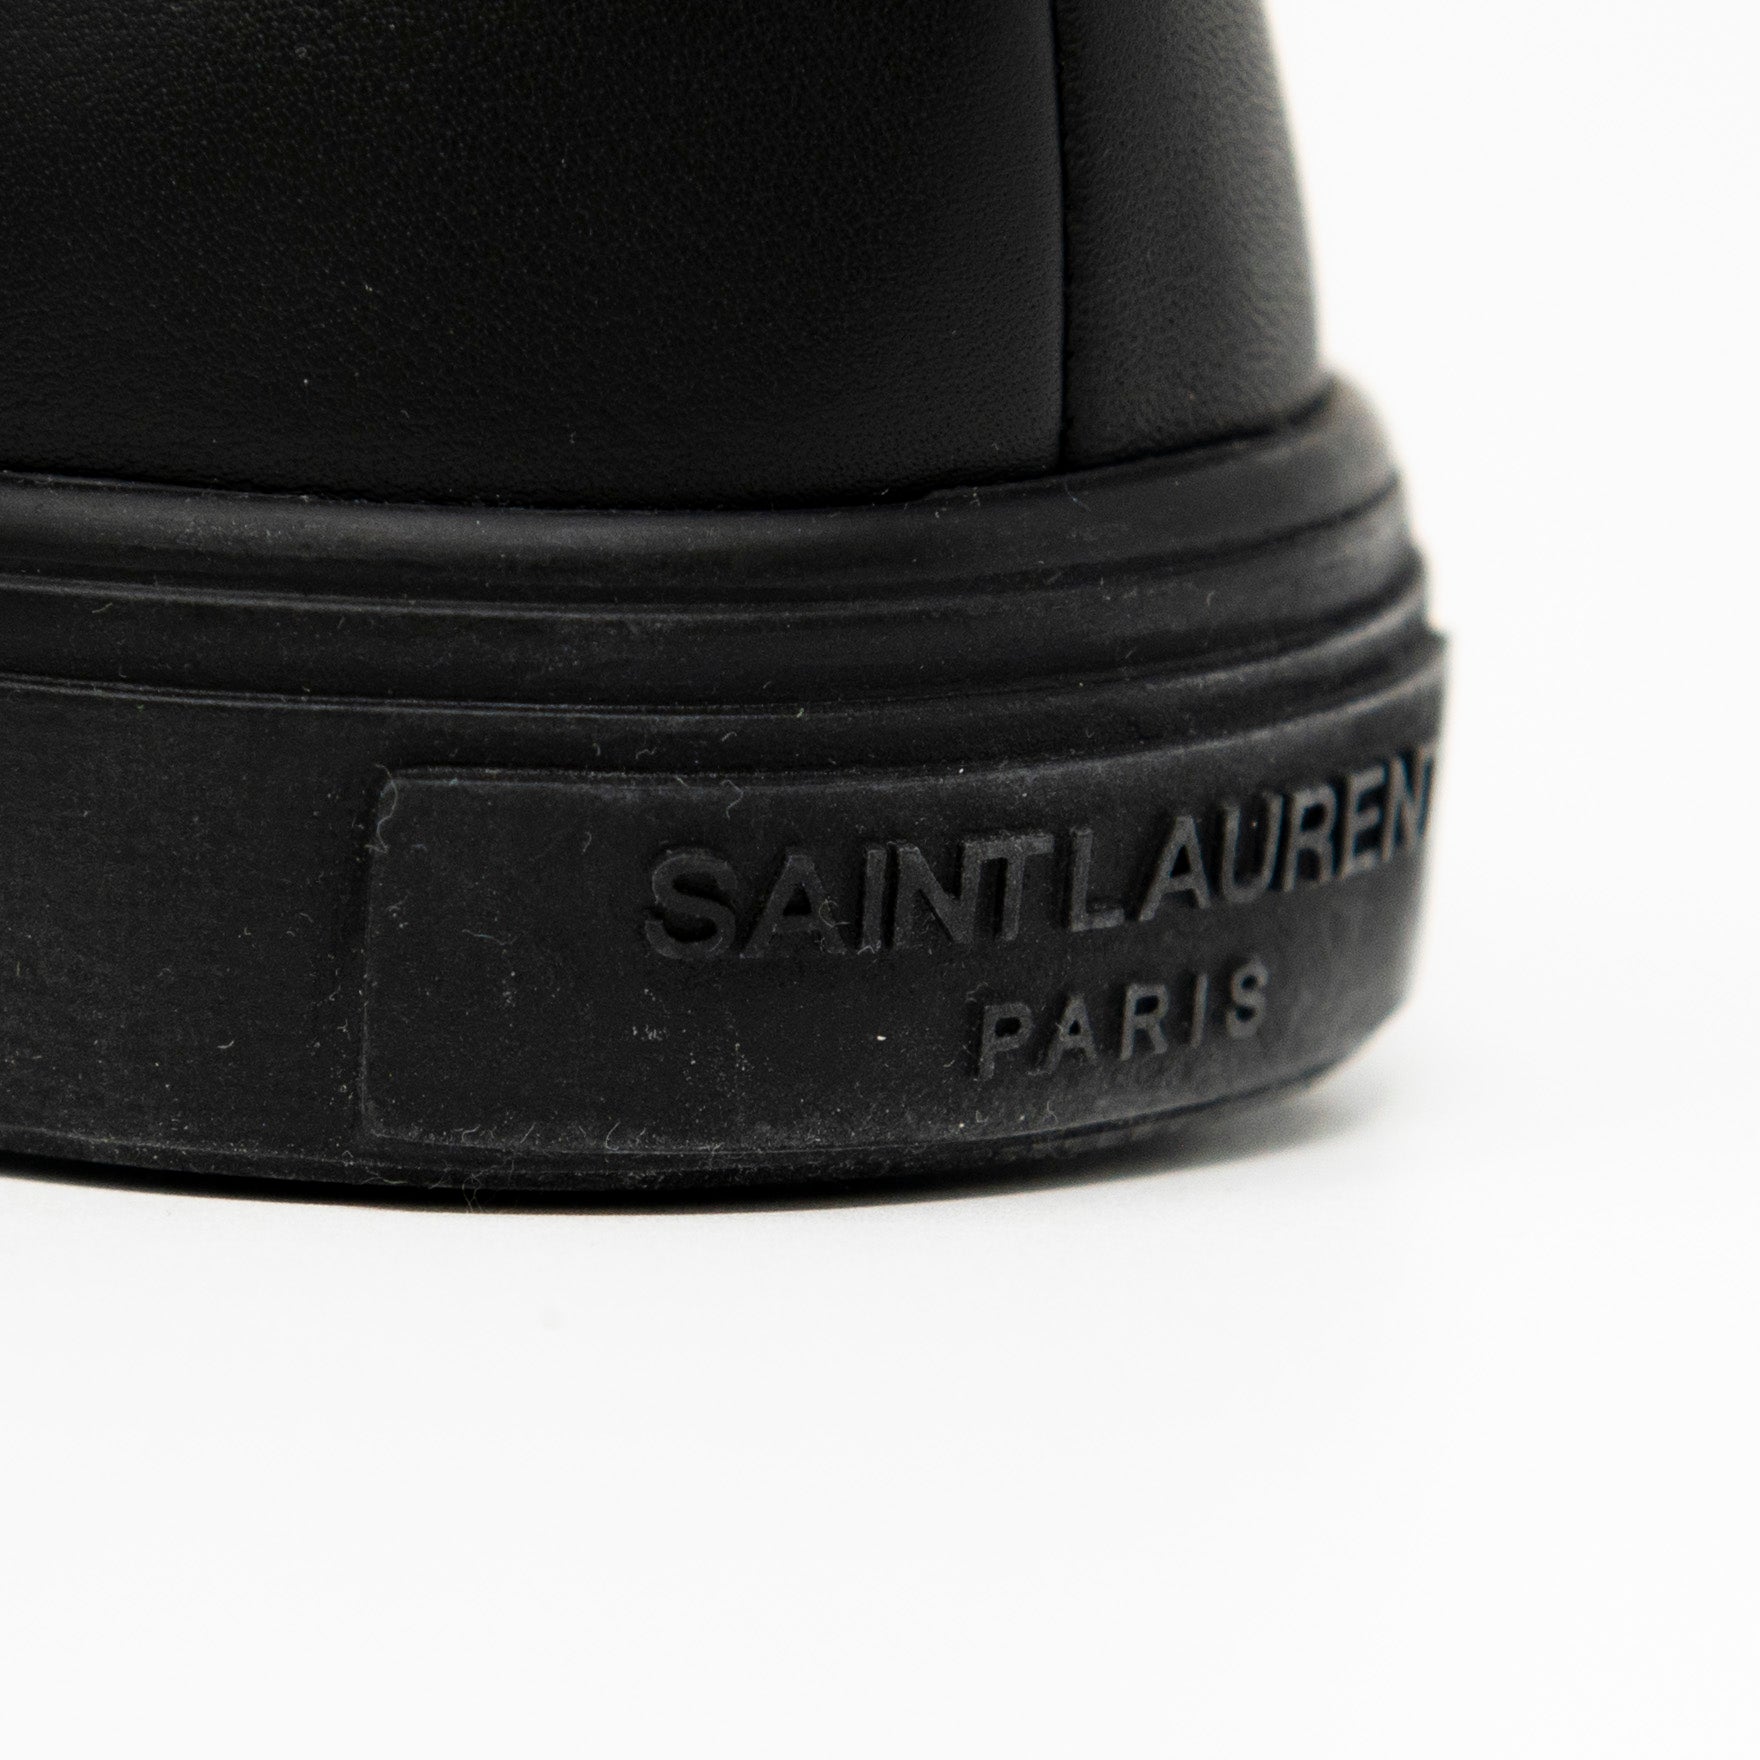 Saint Laurent Black Andy Sneakers 37